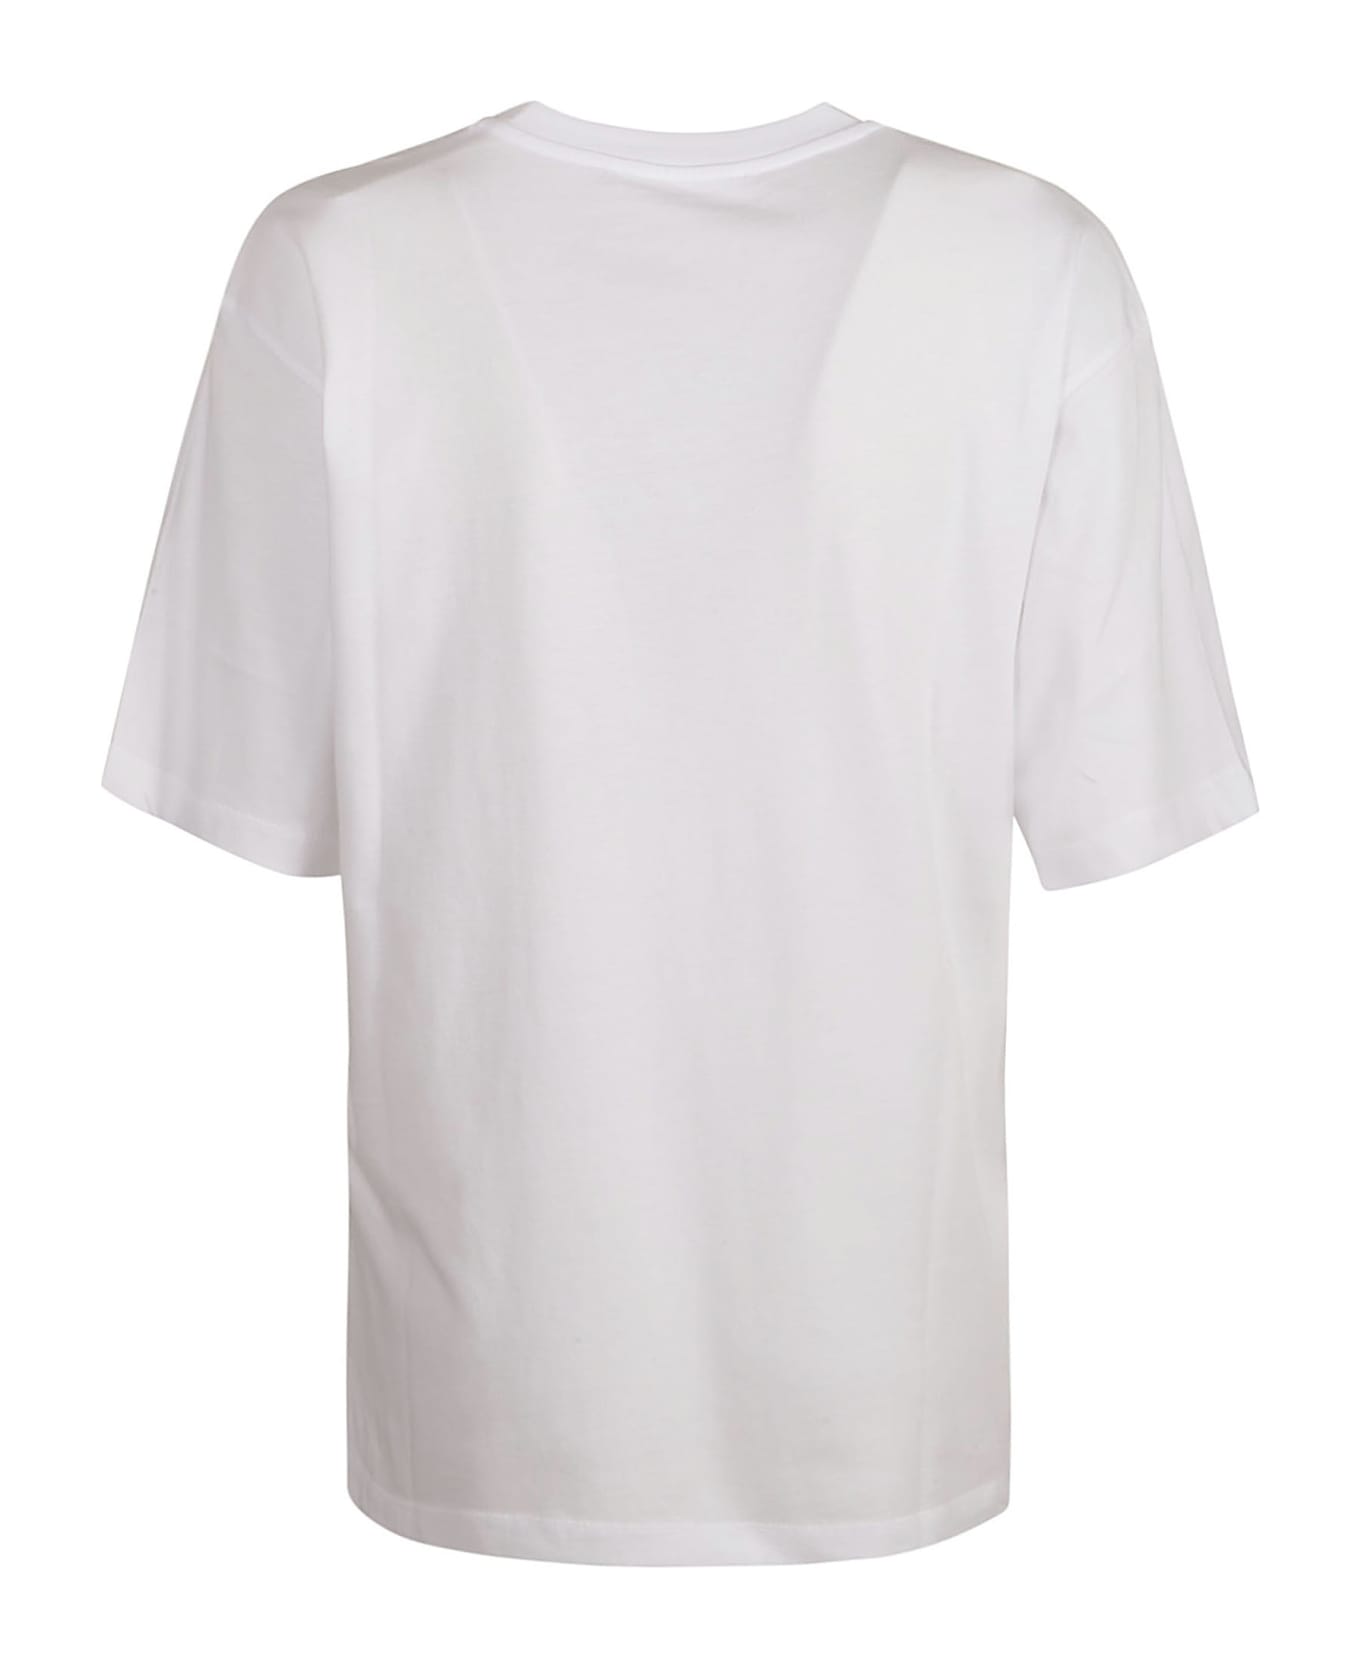 SportMax Luis T-shirt - White